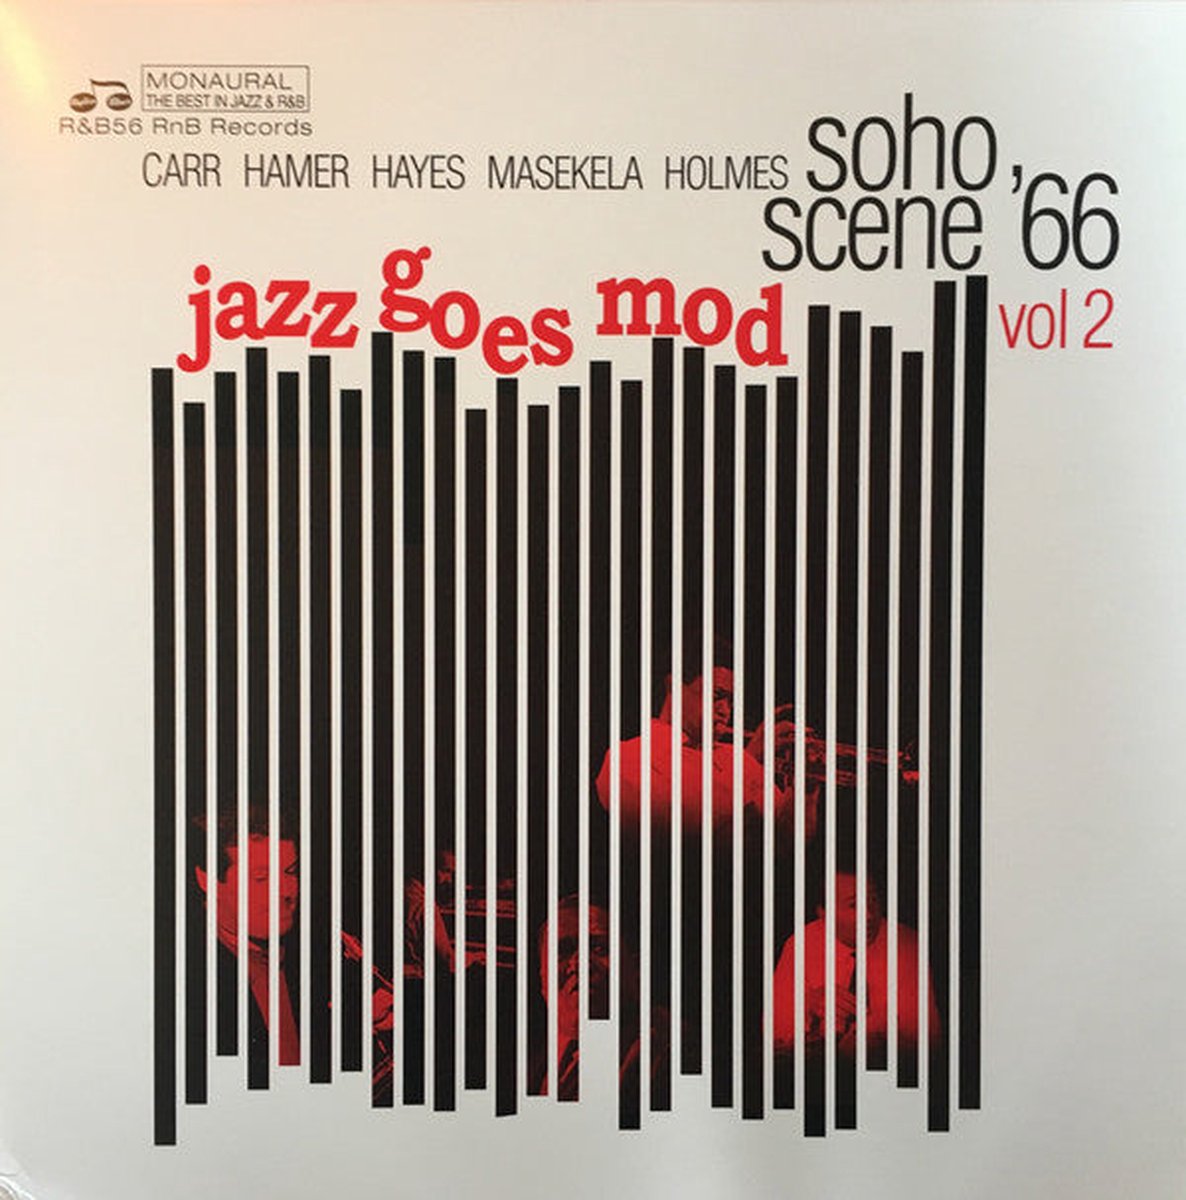 Soho Scene '66 (volume 2 Jazz Goes Mod)